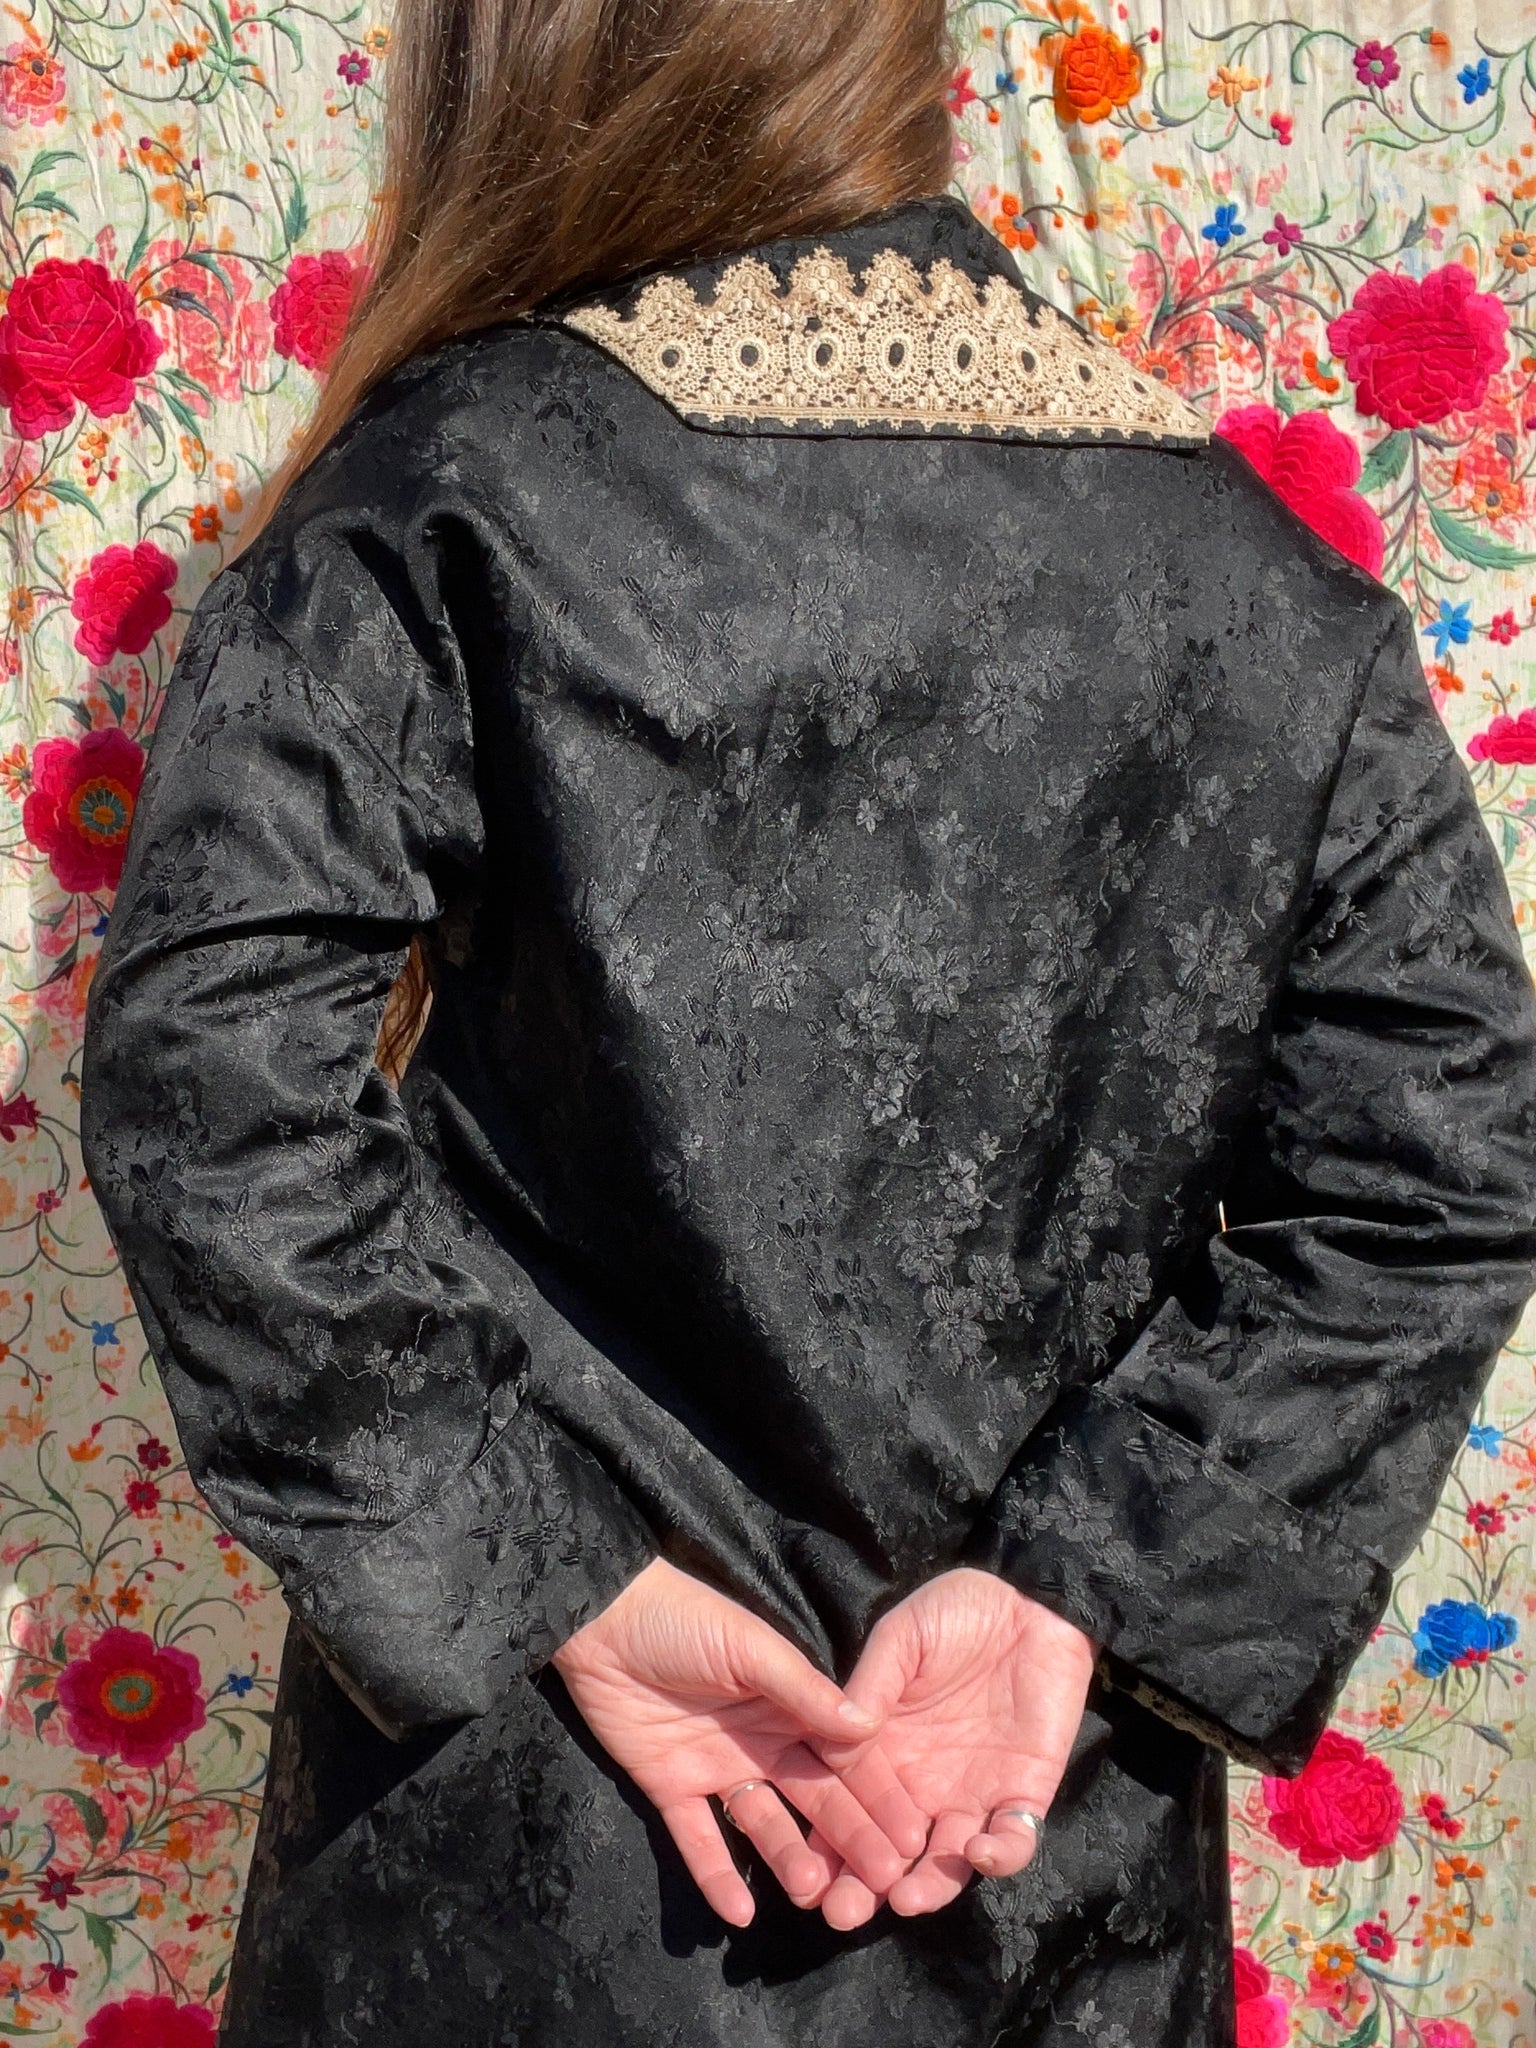 Antique 1920s Satin Damask Lace Bow & Tassel Jacket